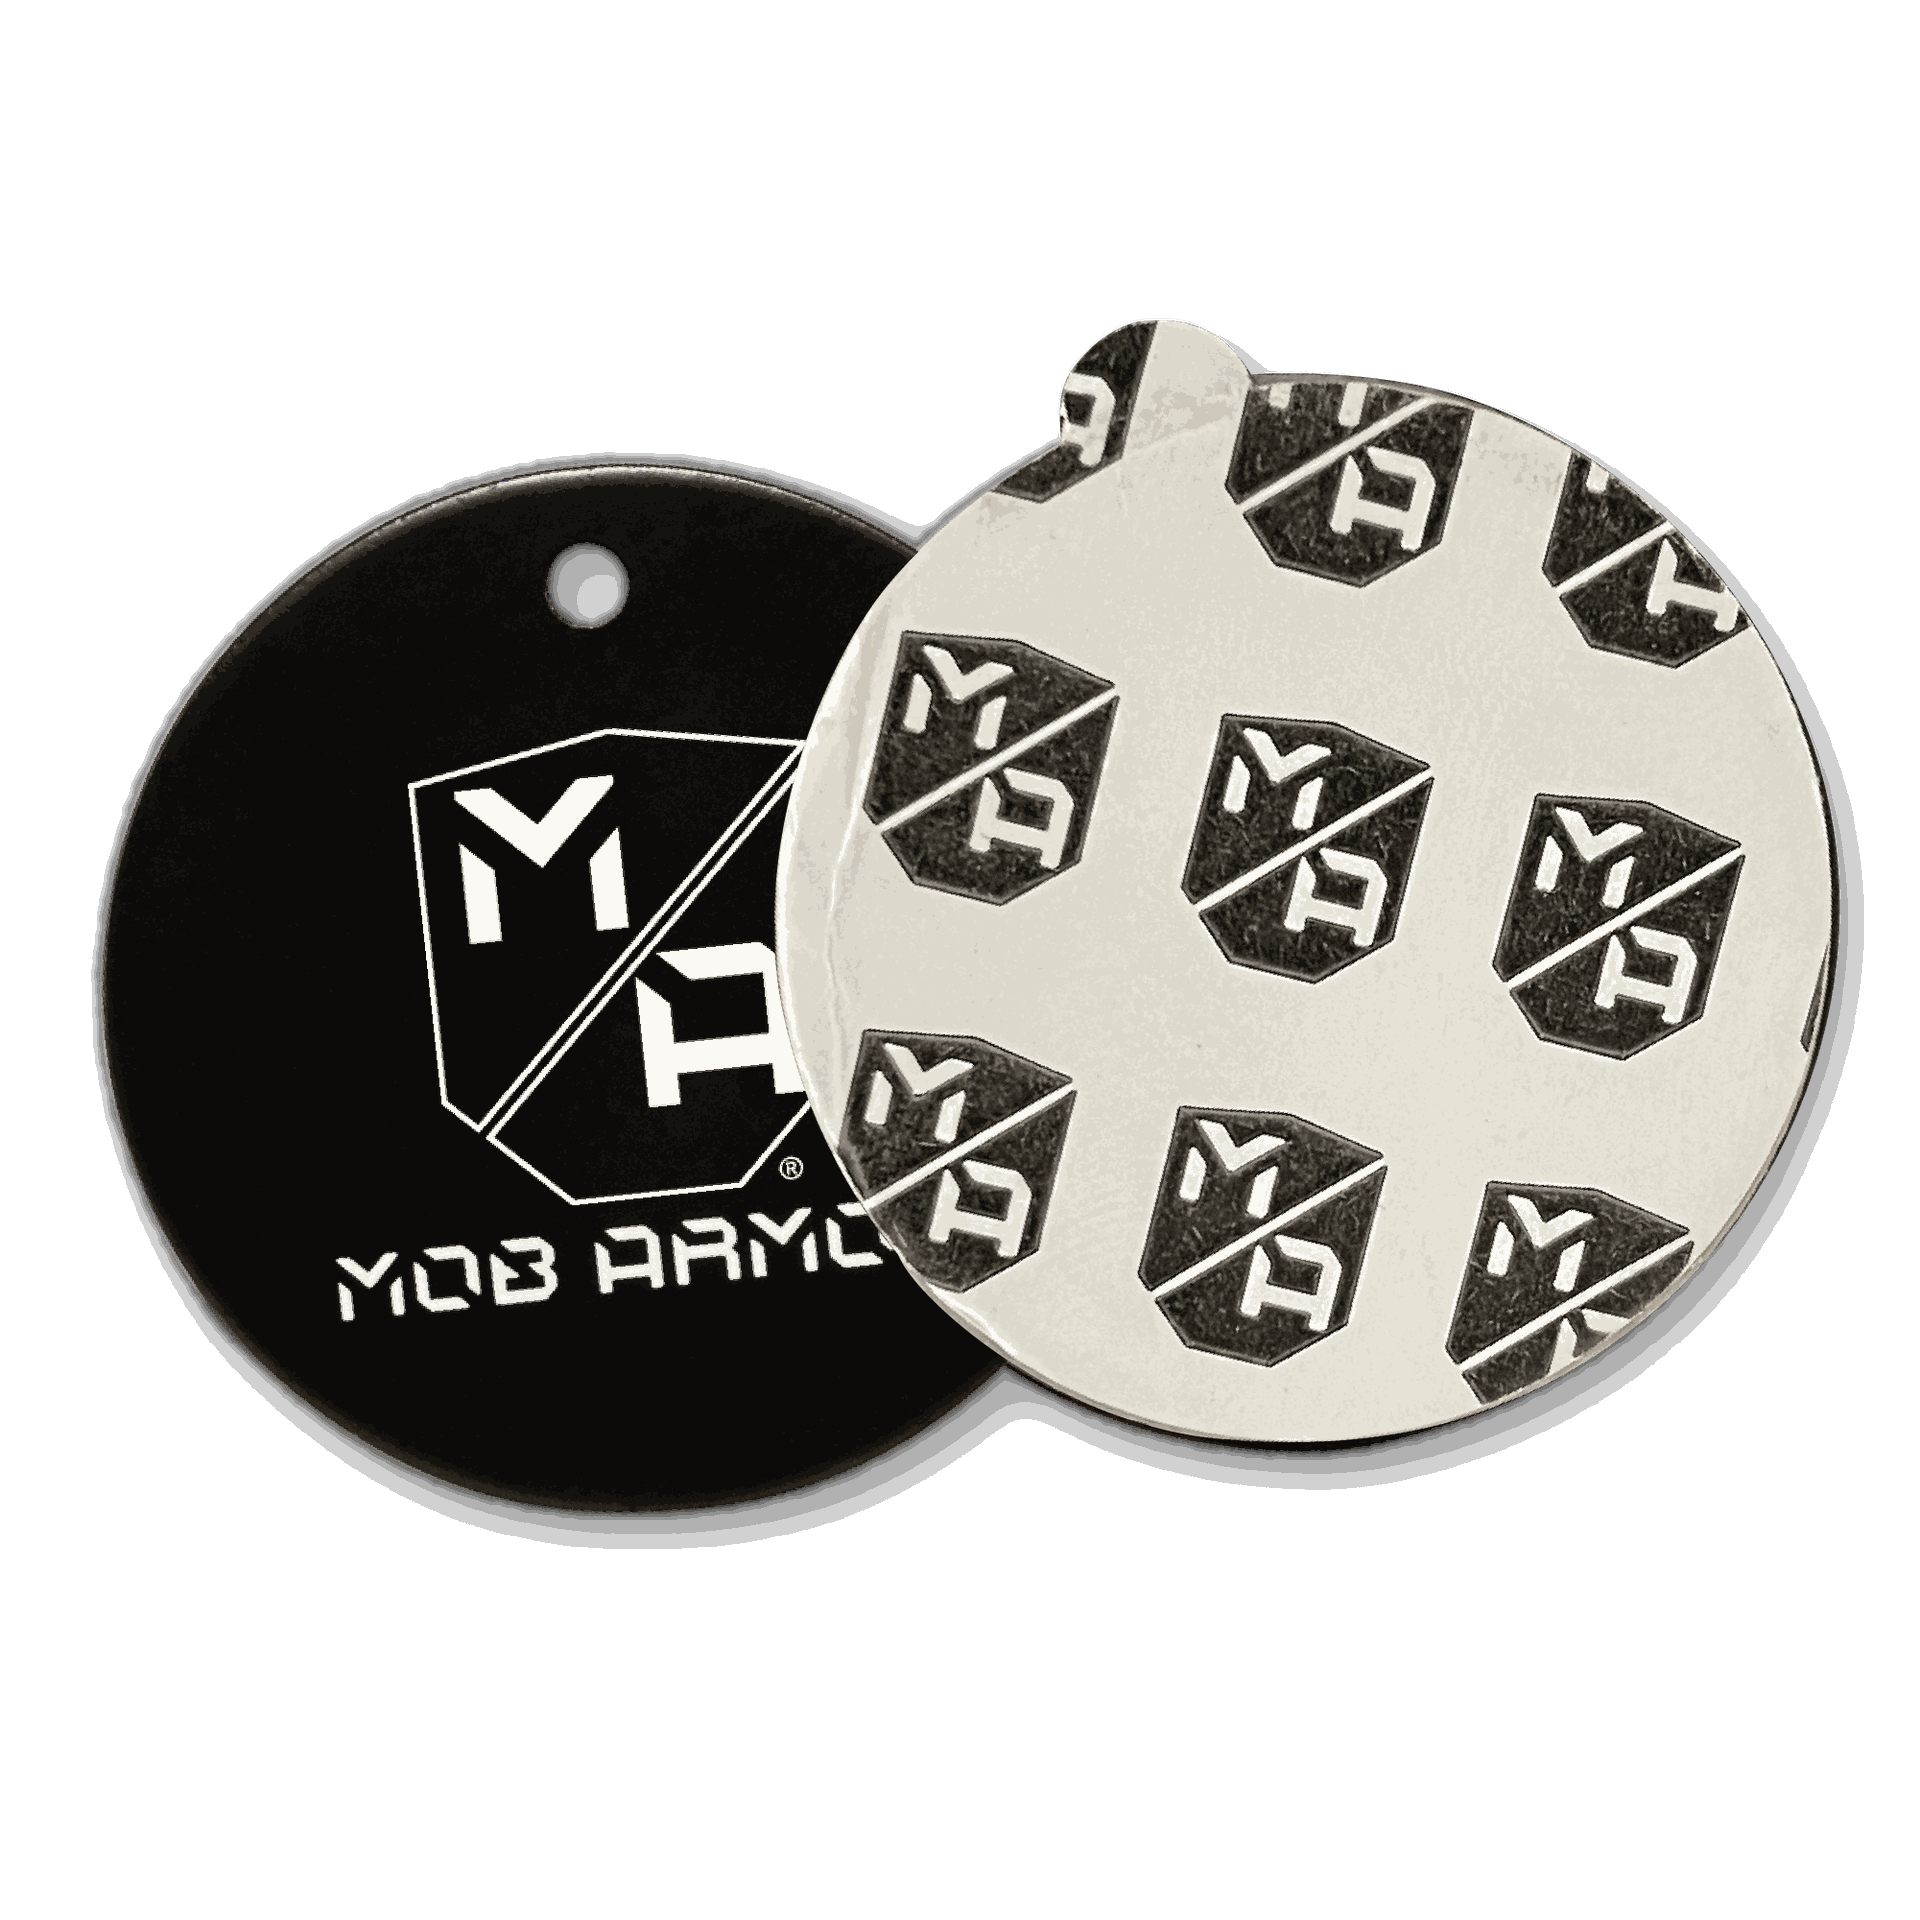 Mob Armor mounting discs